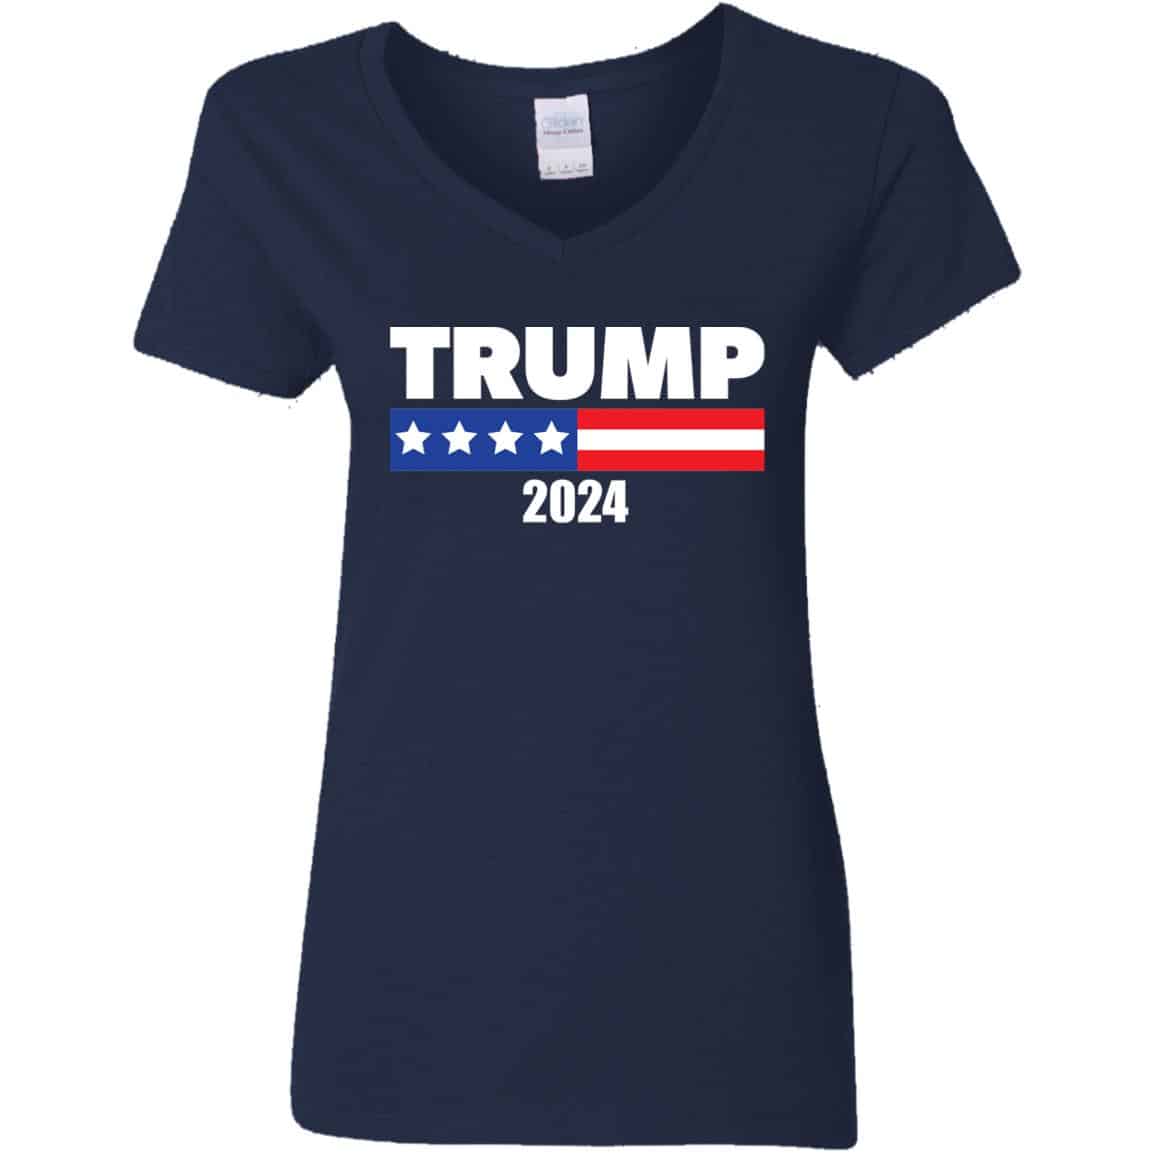 blue women's v-neck Trump 2024 election T-shirt